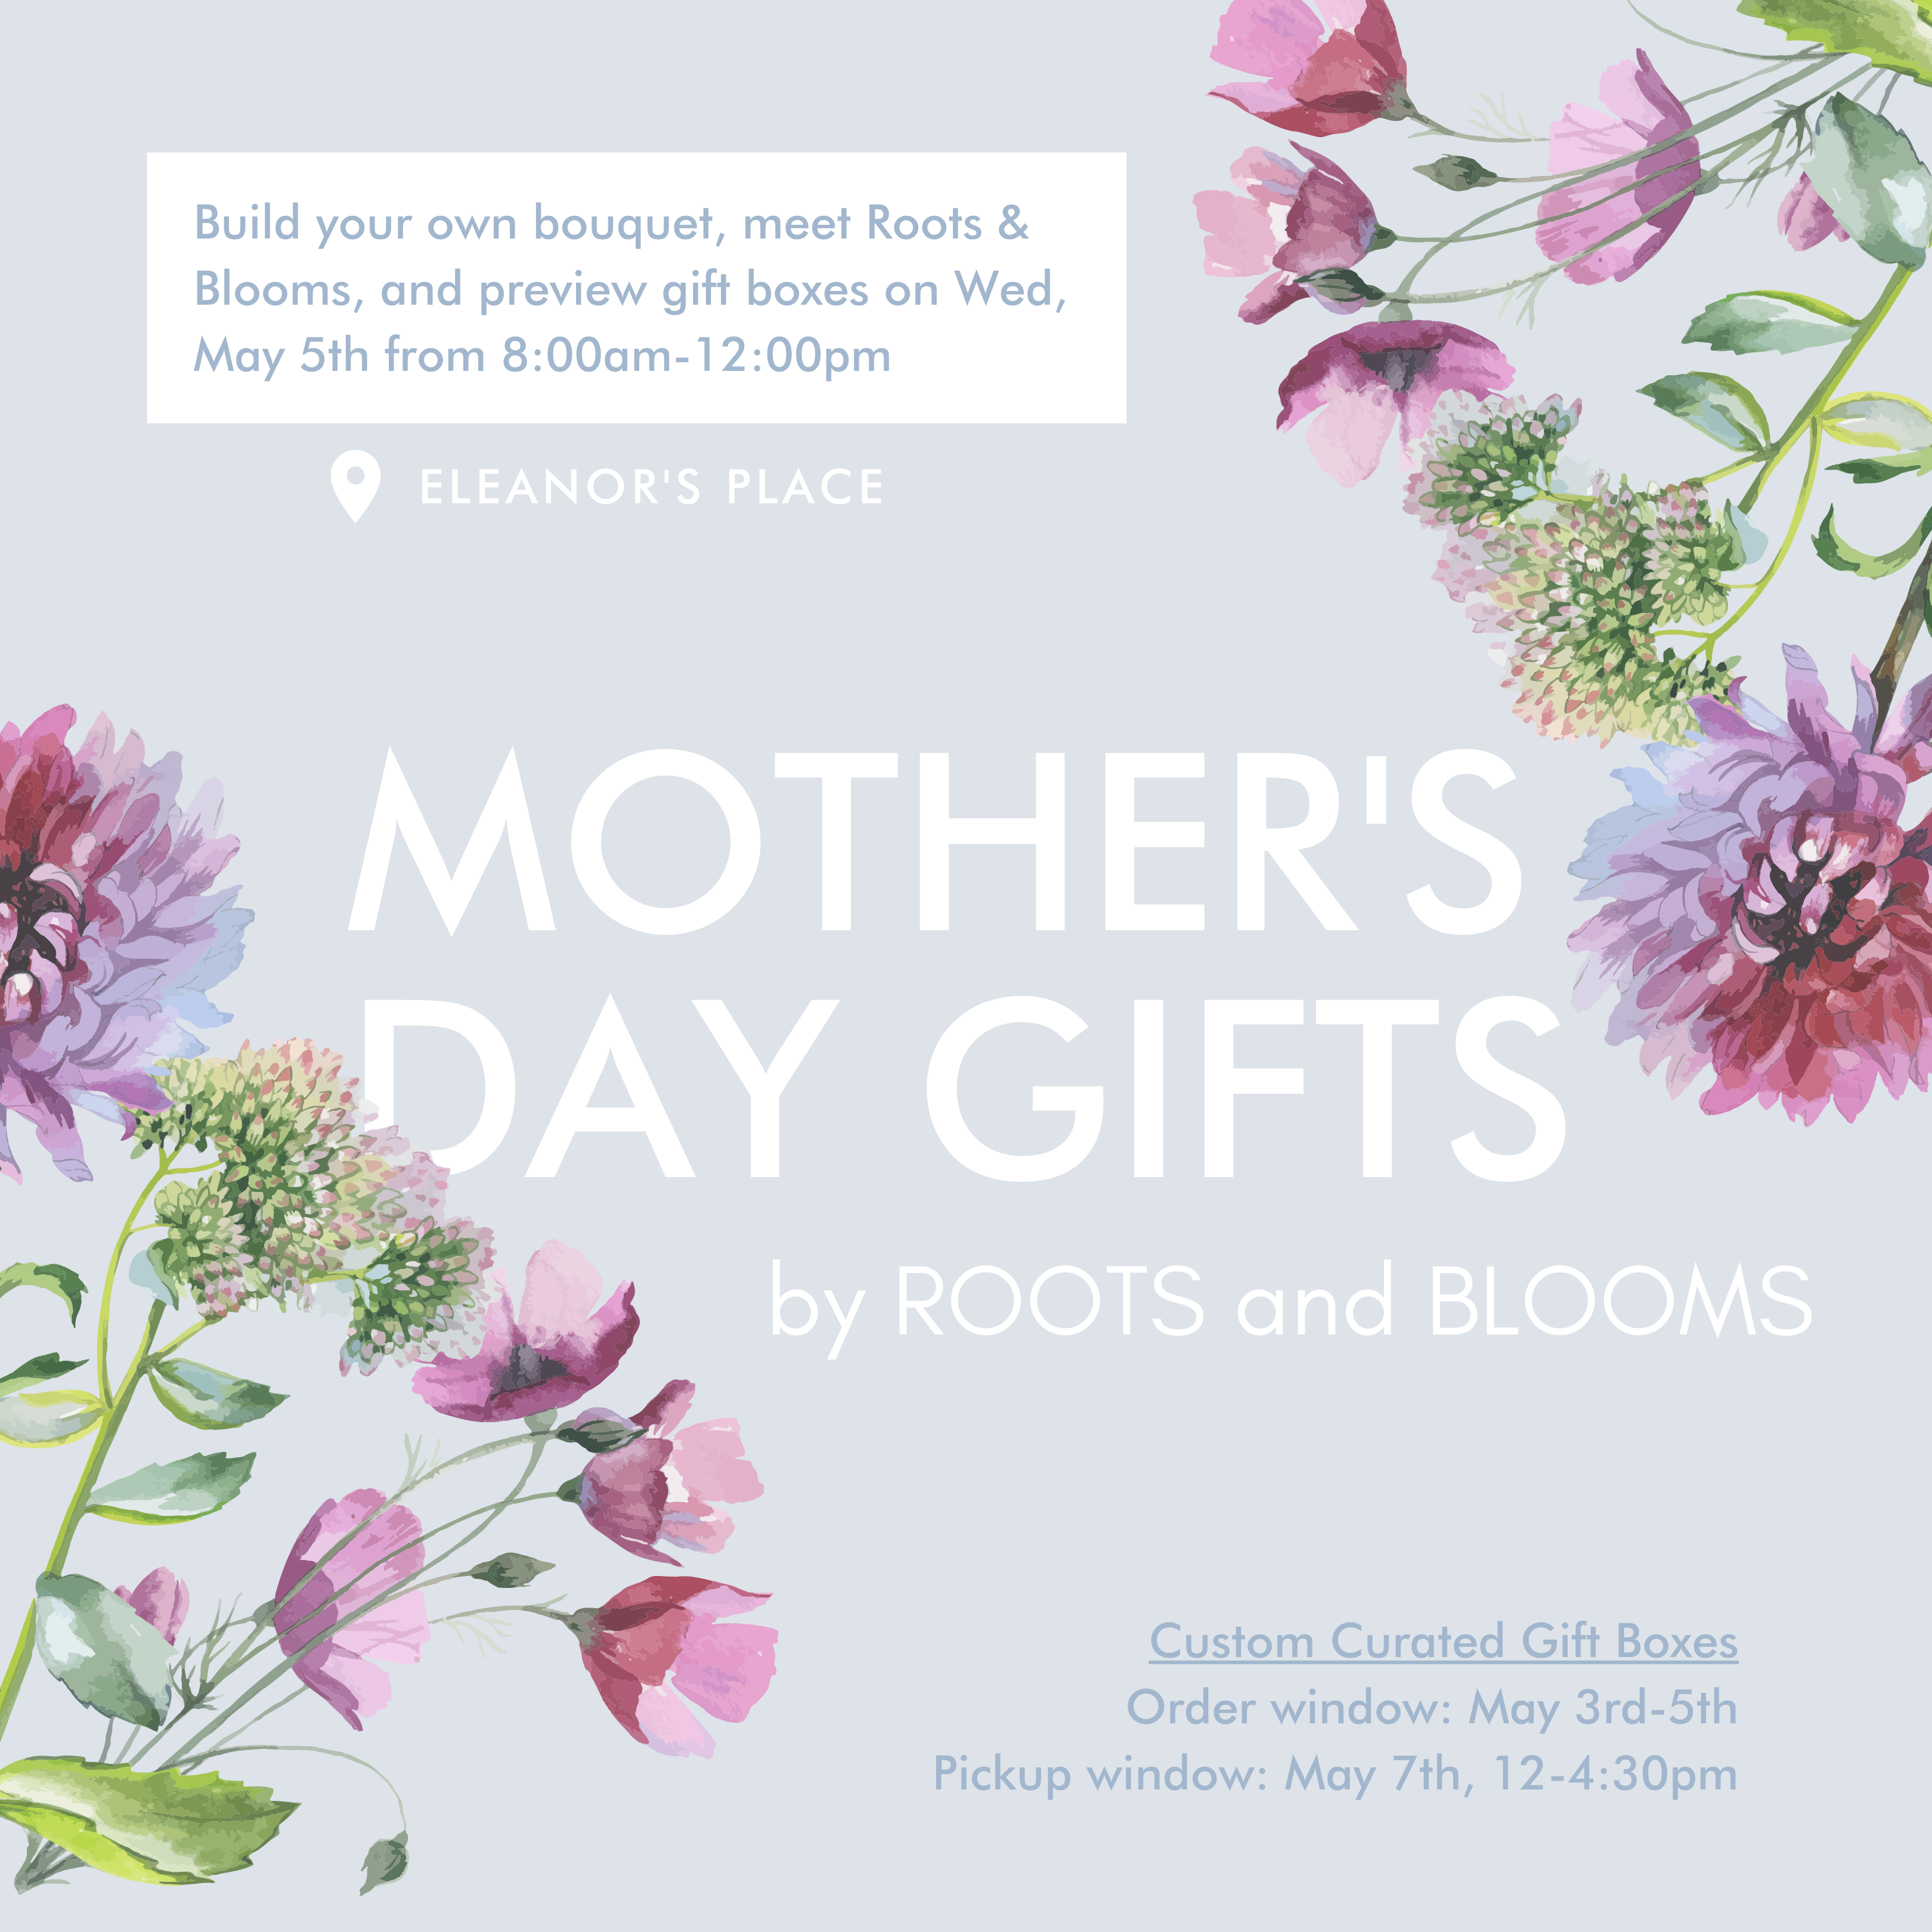 Roots & Blooms Bouquet Bar